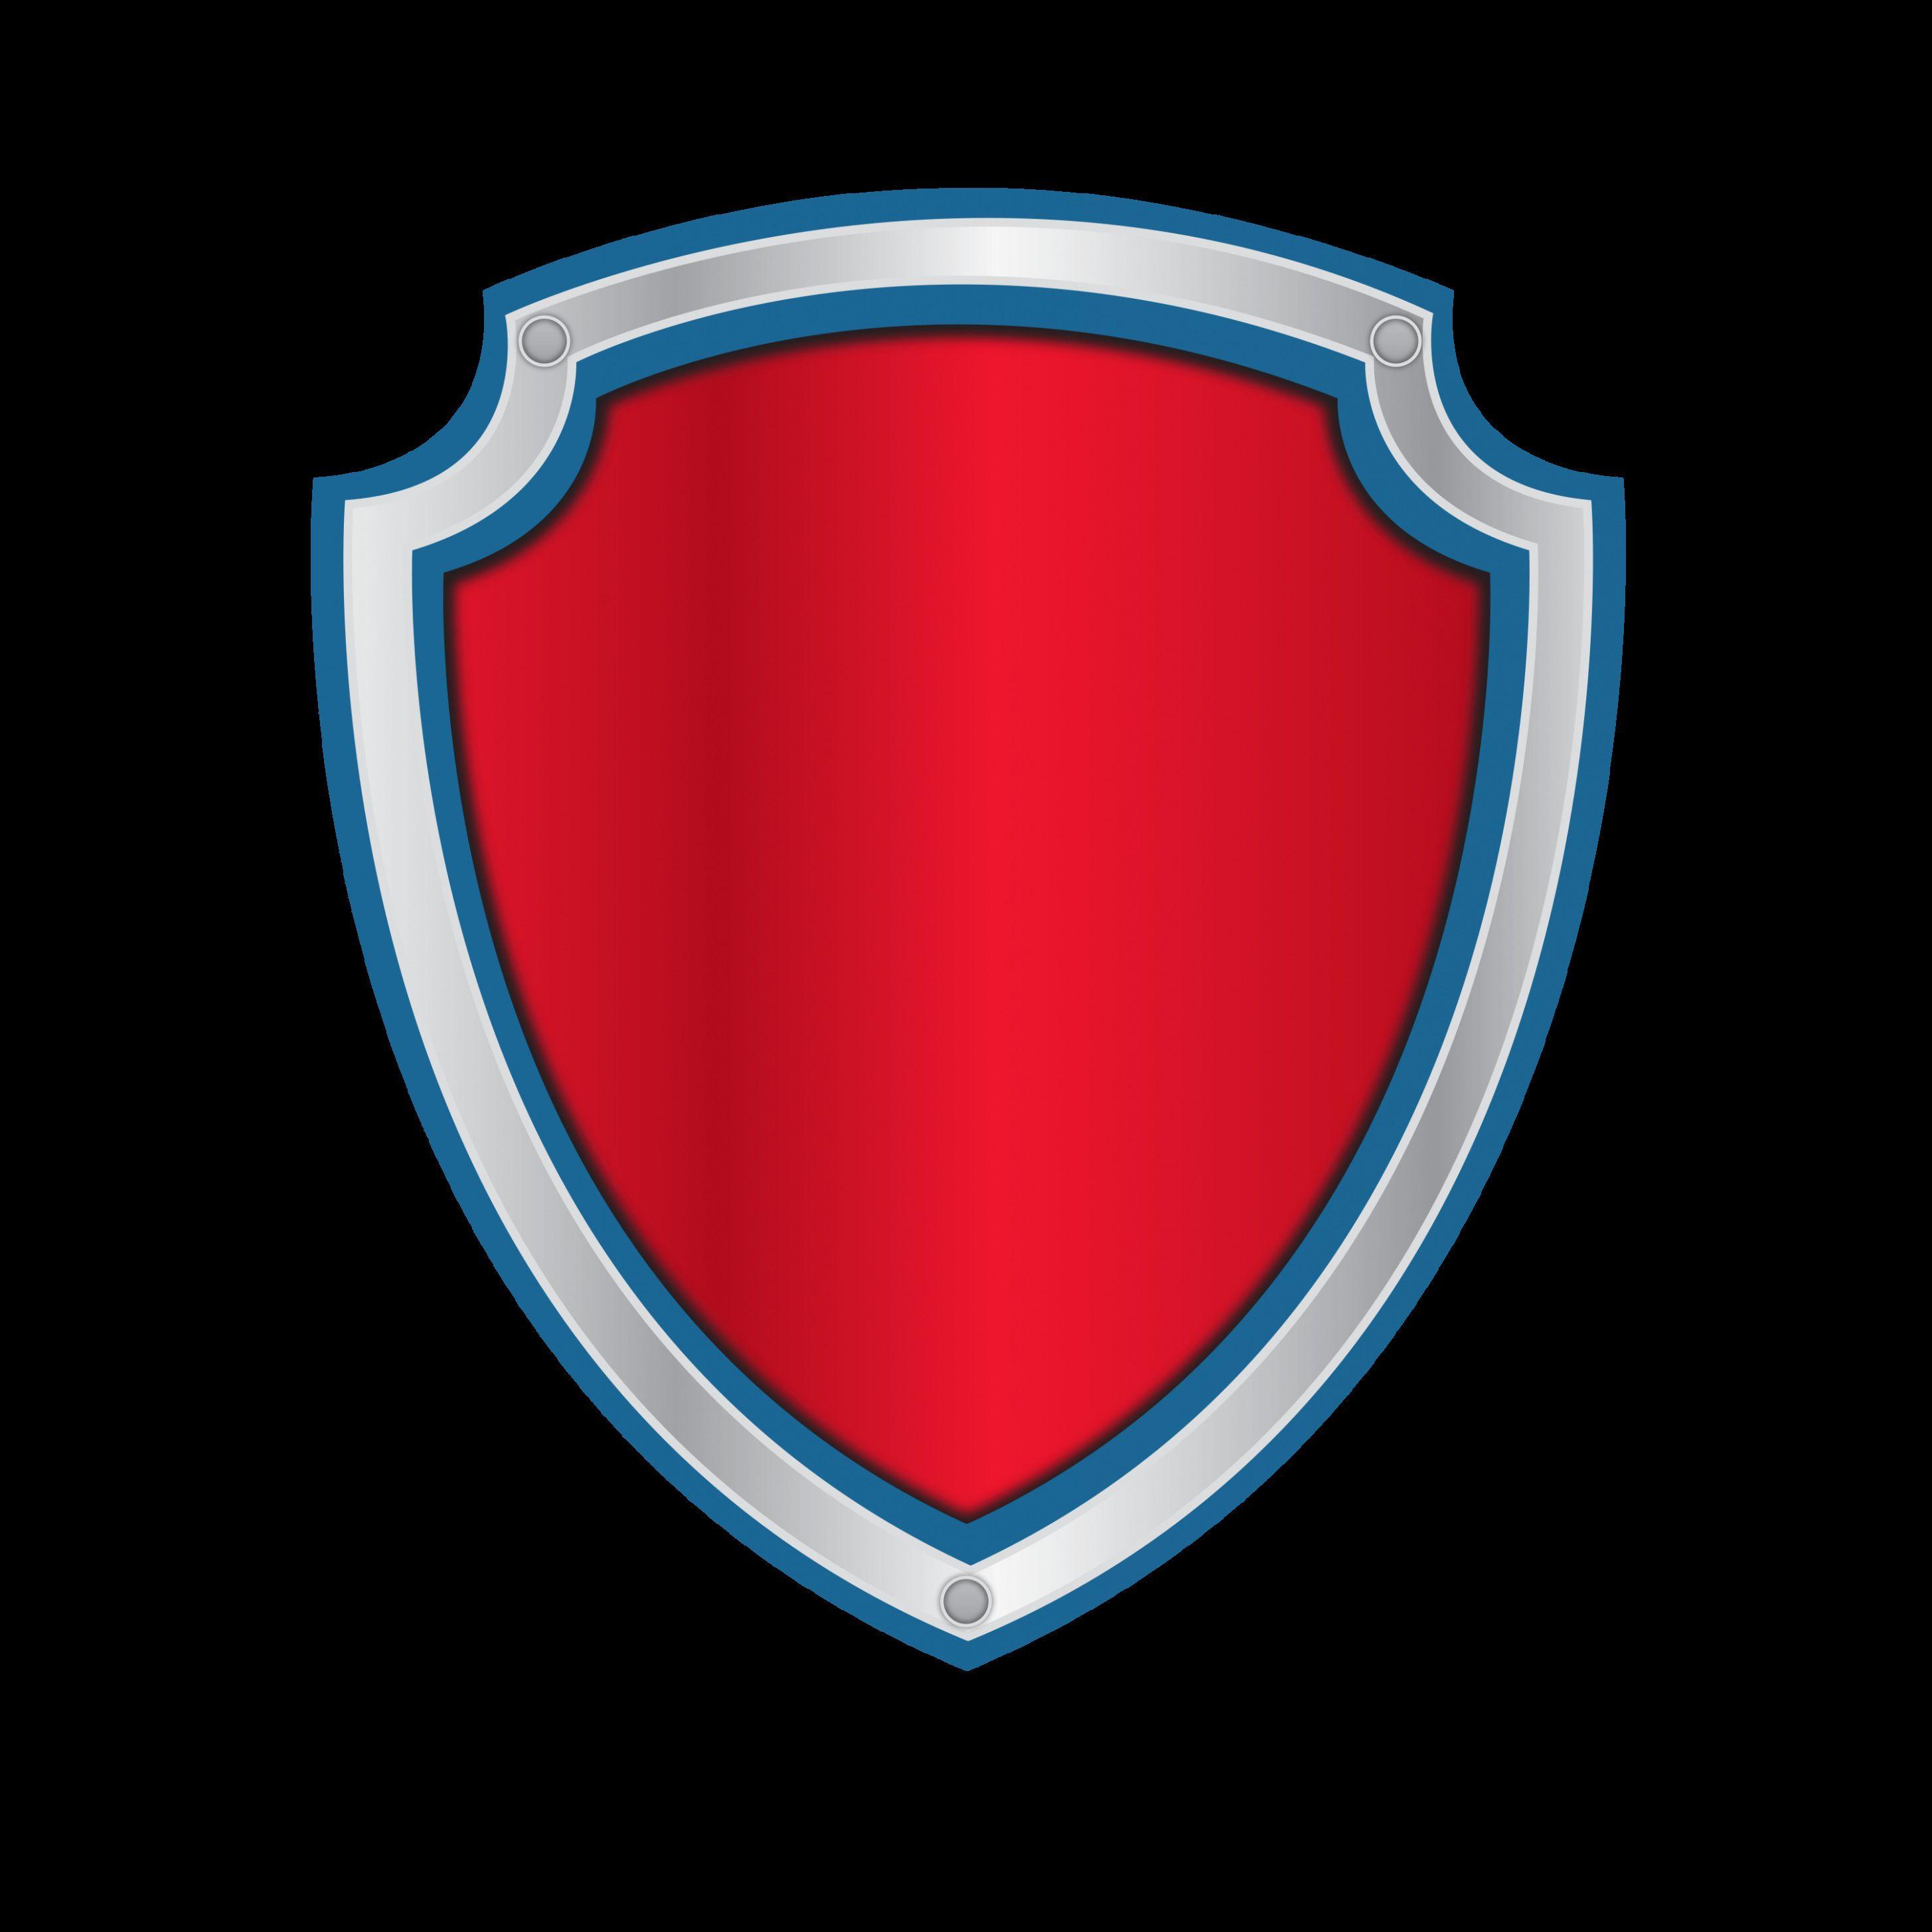 Blue Paw Patrol Logo - Download 18 Paw Patrol Logo Template - Gain Creativity | Top ...